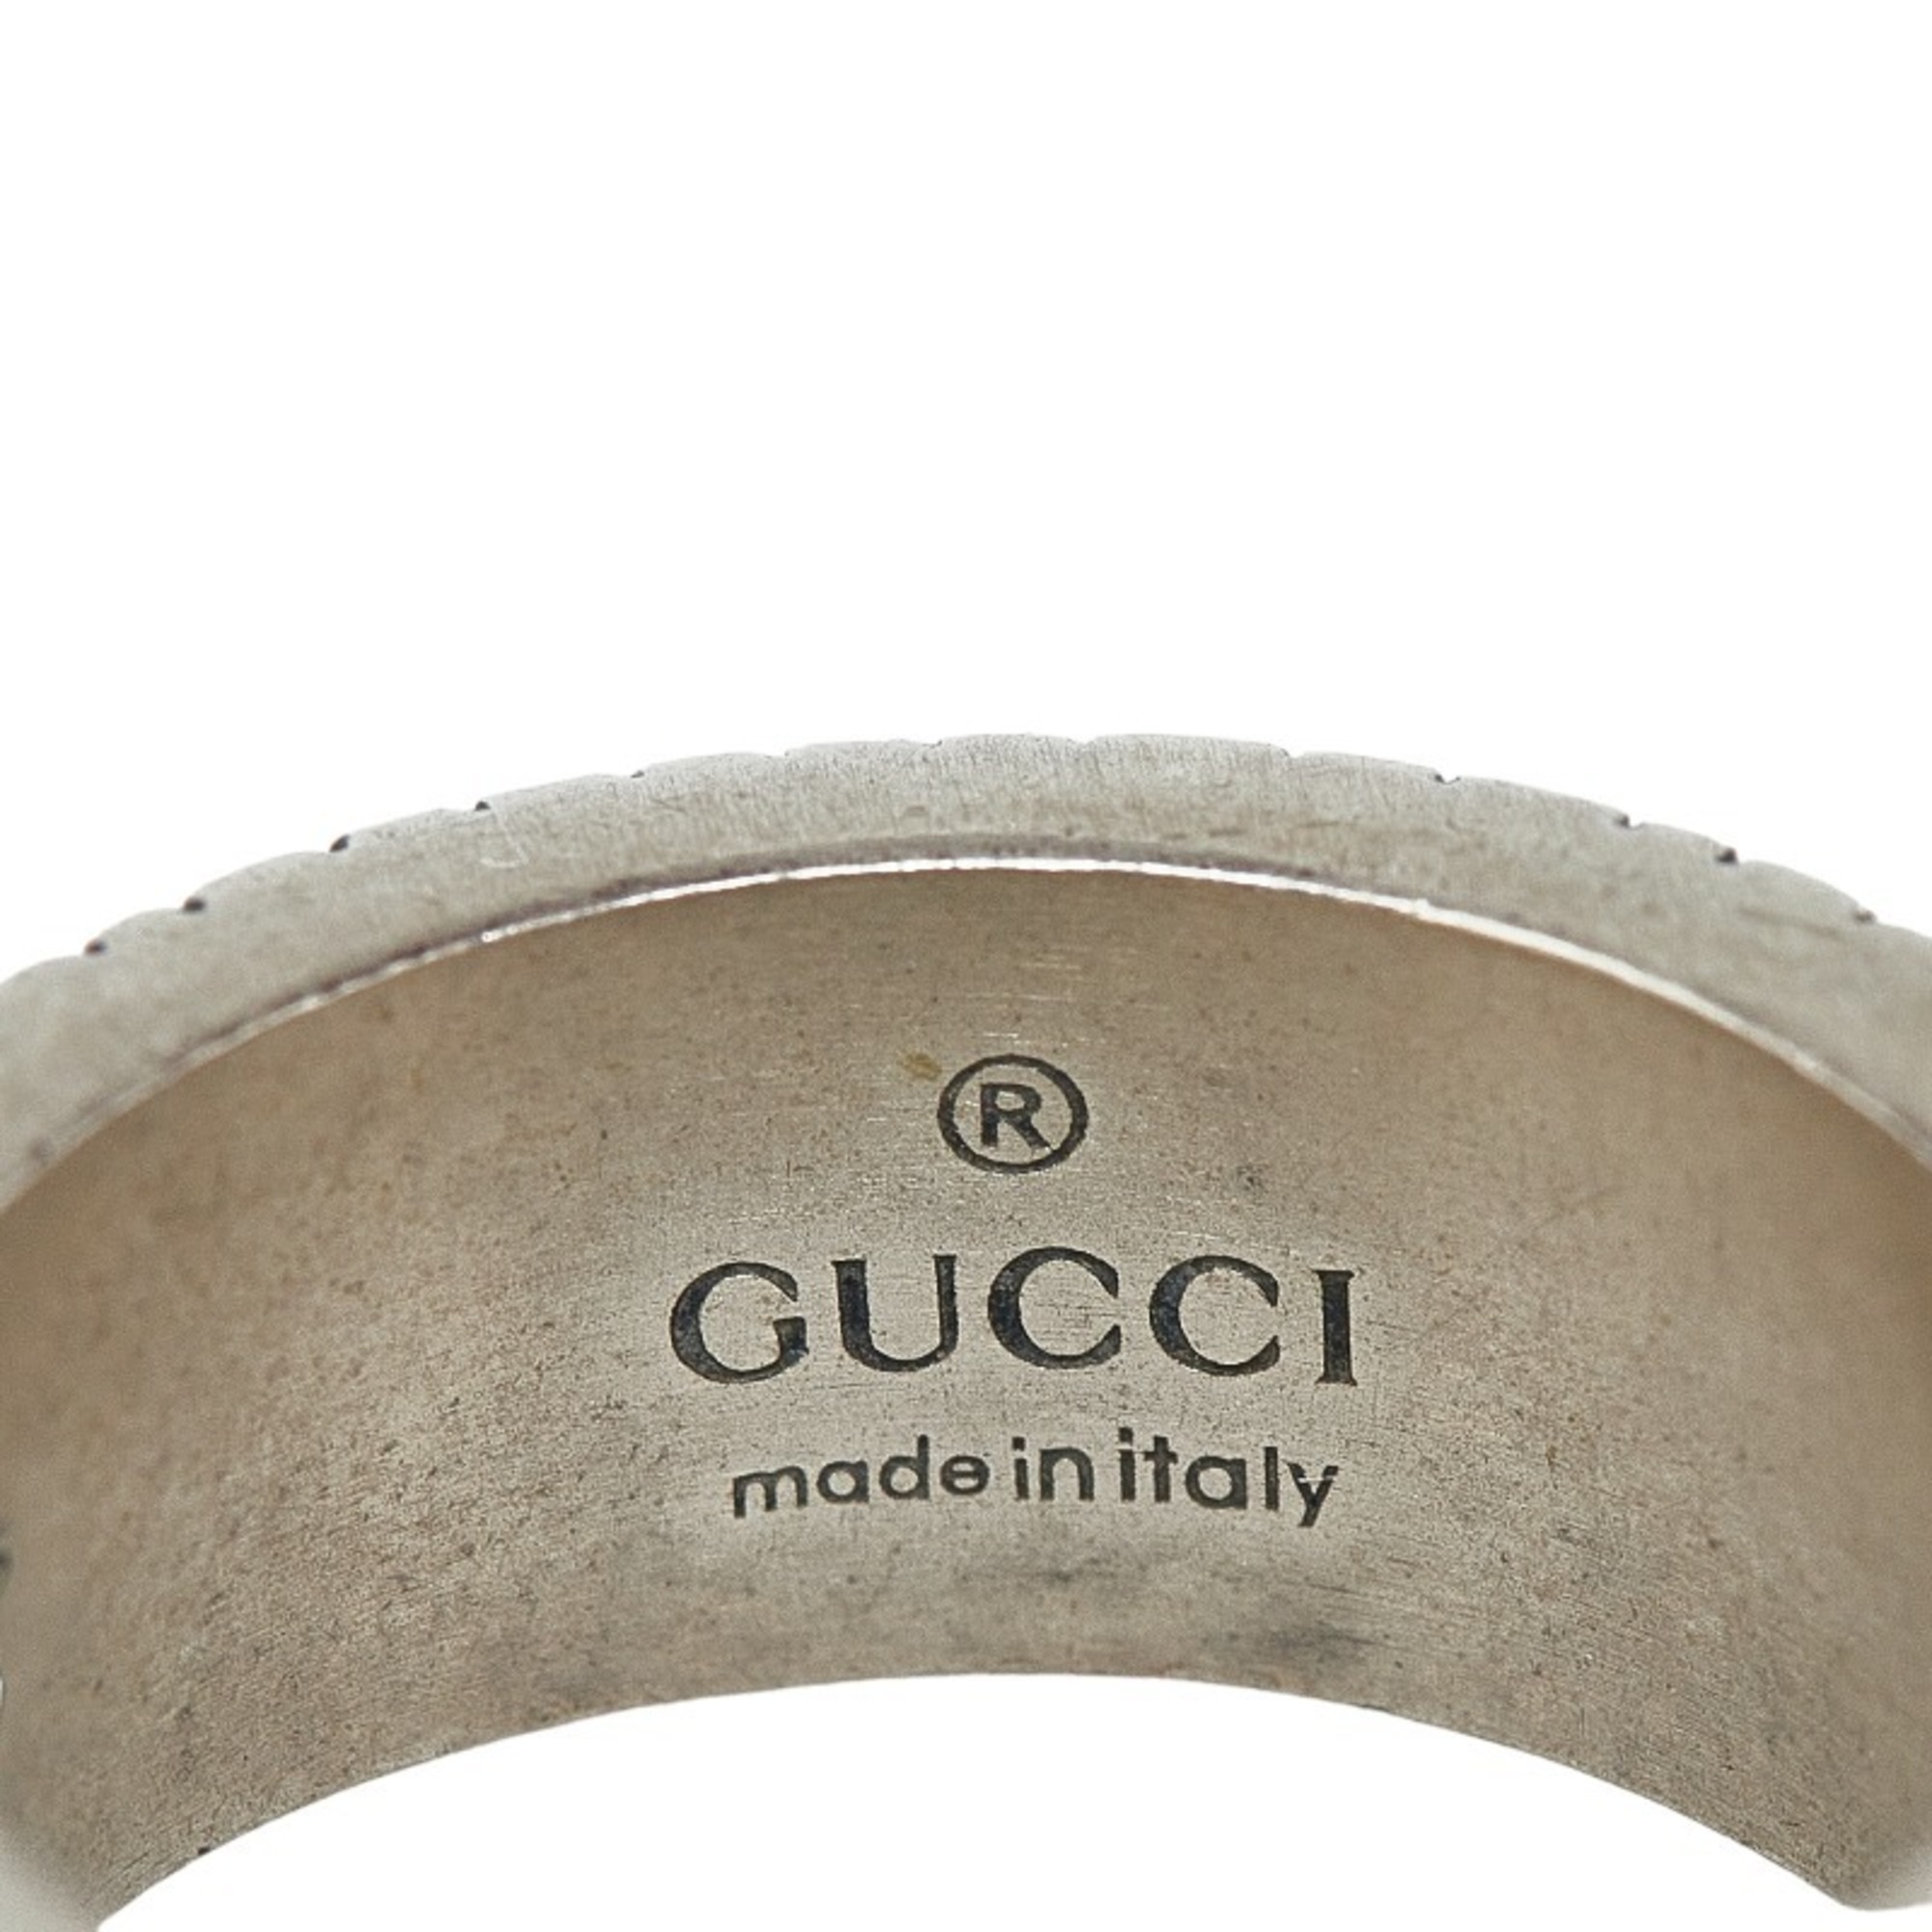 Gucci Double G Silver Ring SV925 Men's GUCCI